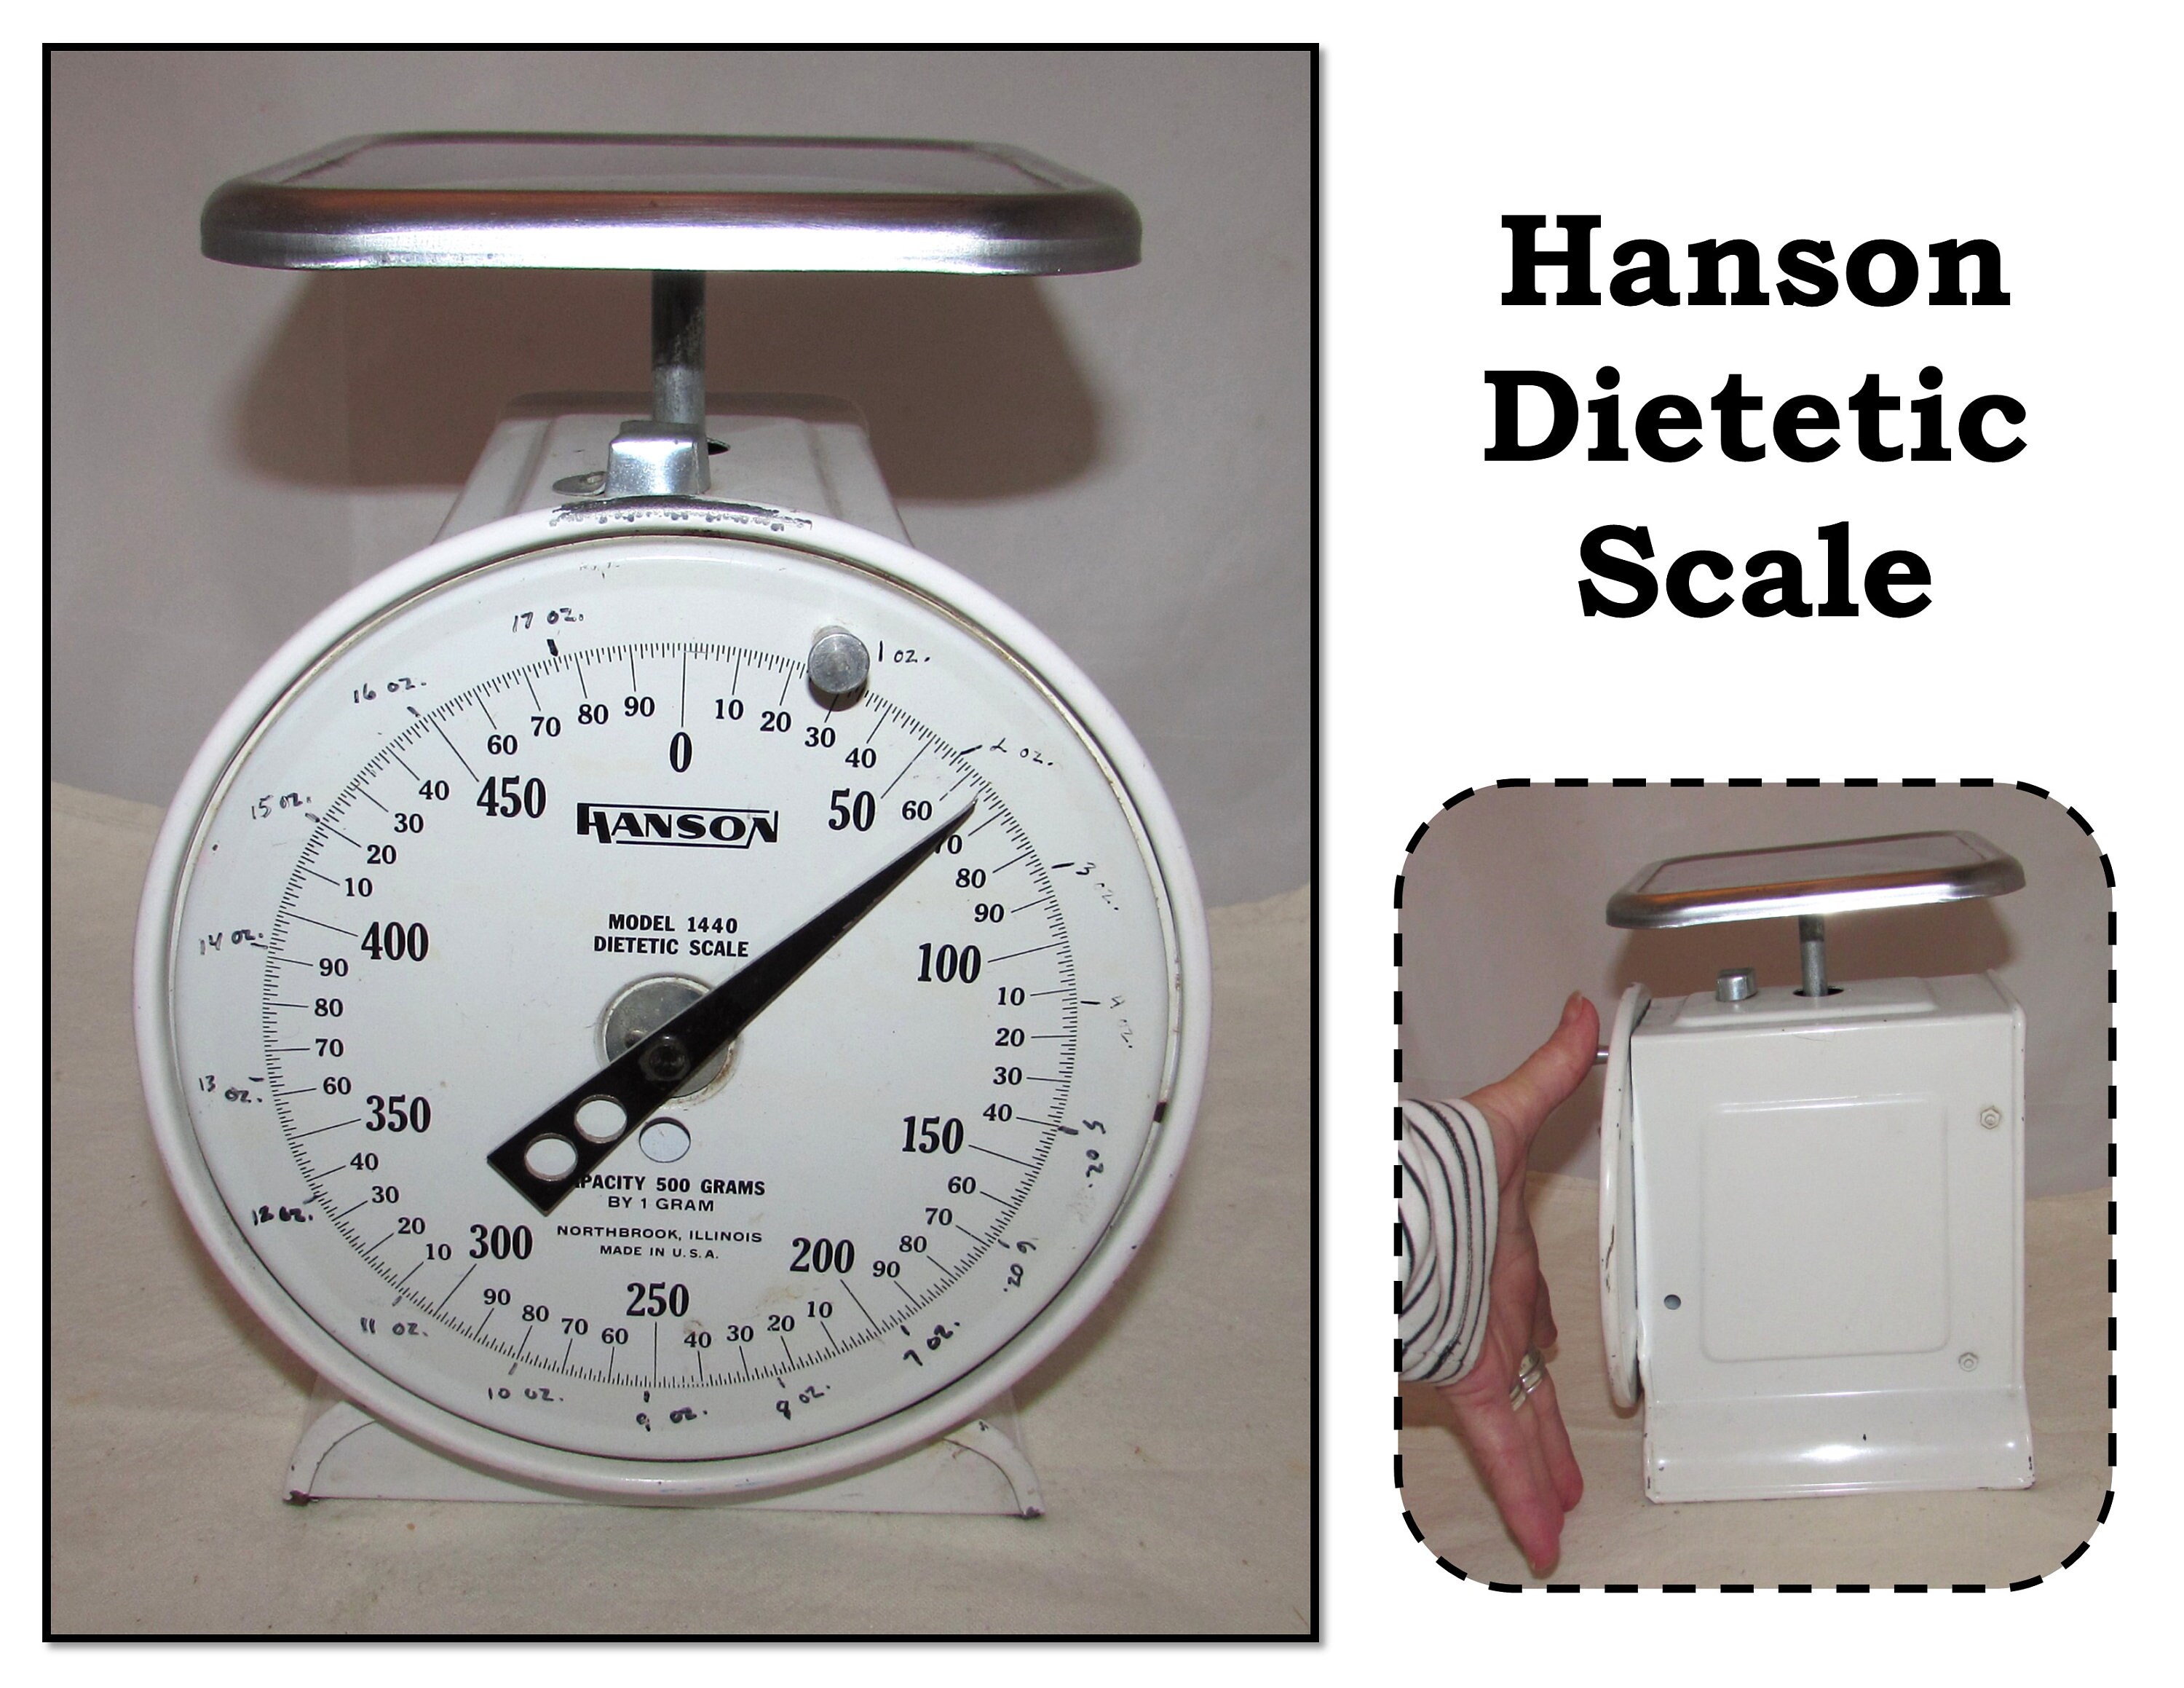 Hanson Dietetic Scale Model 1440 